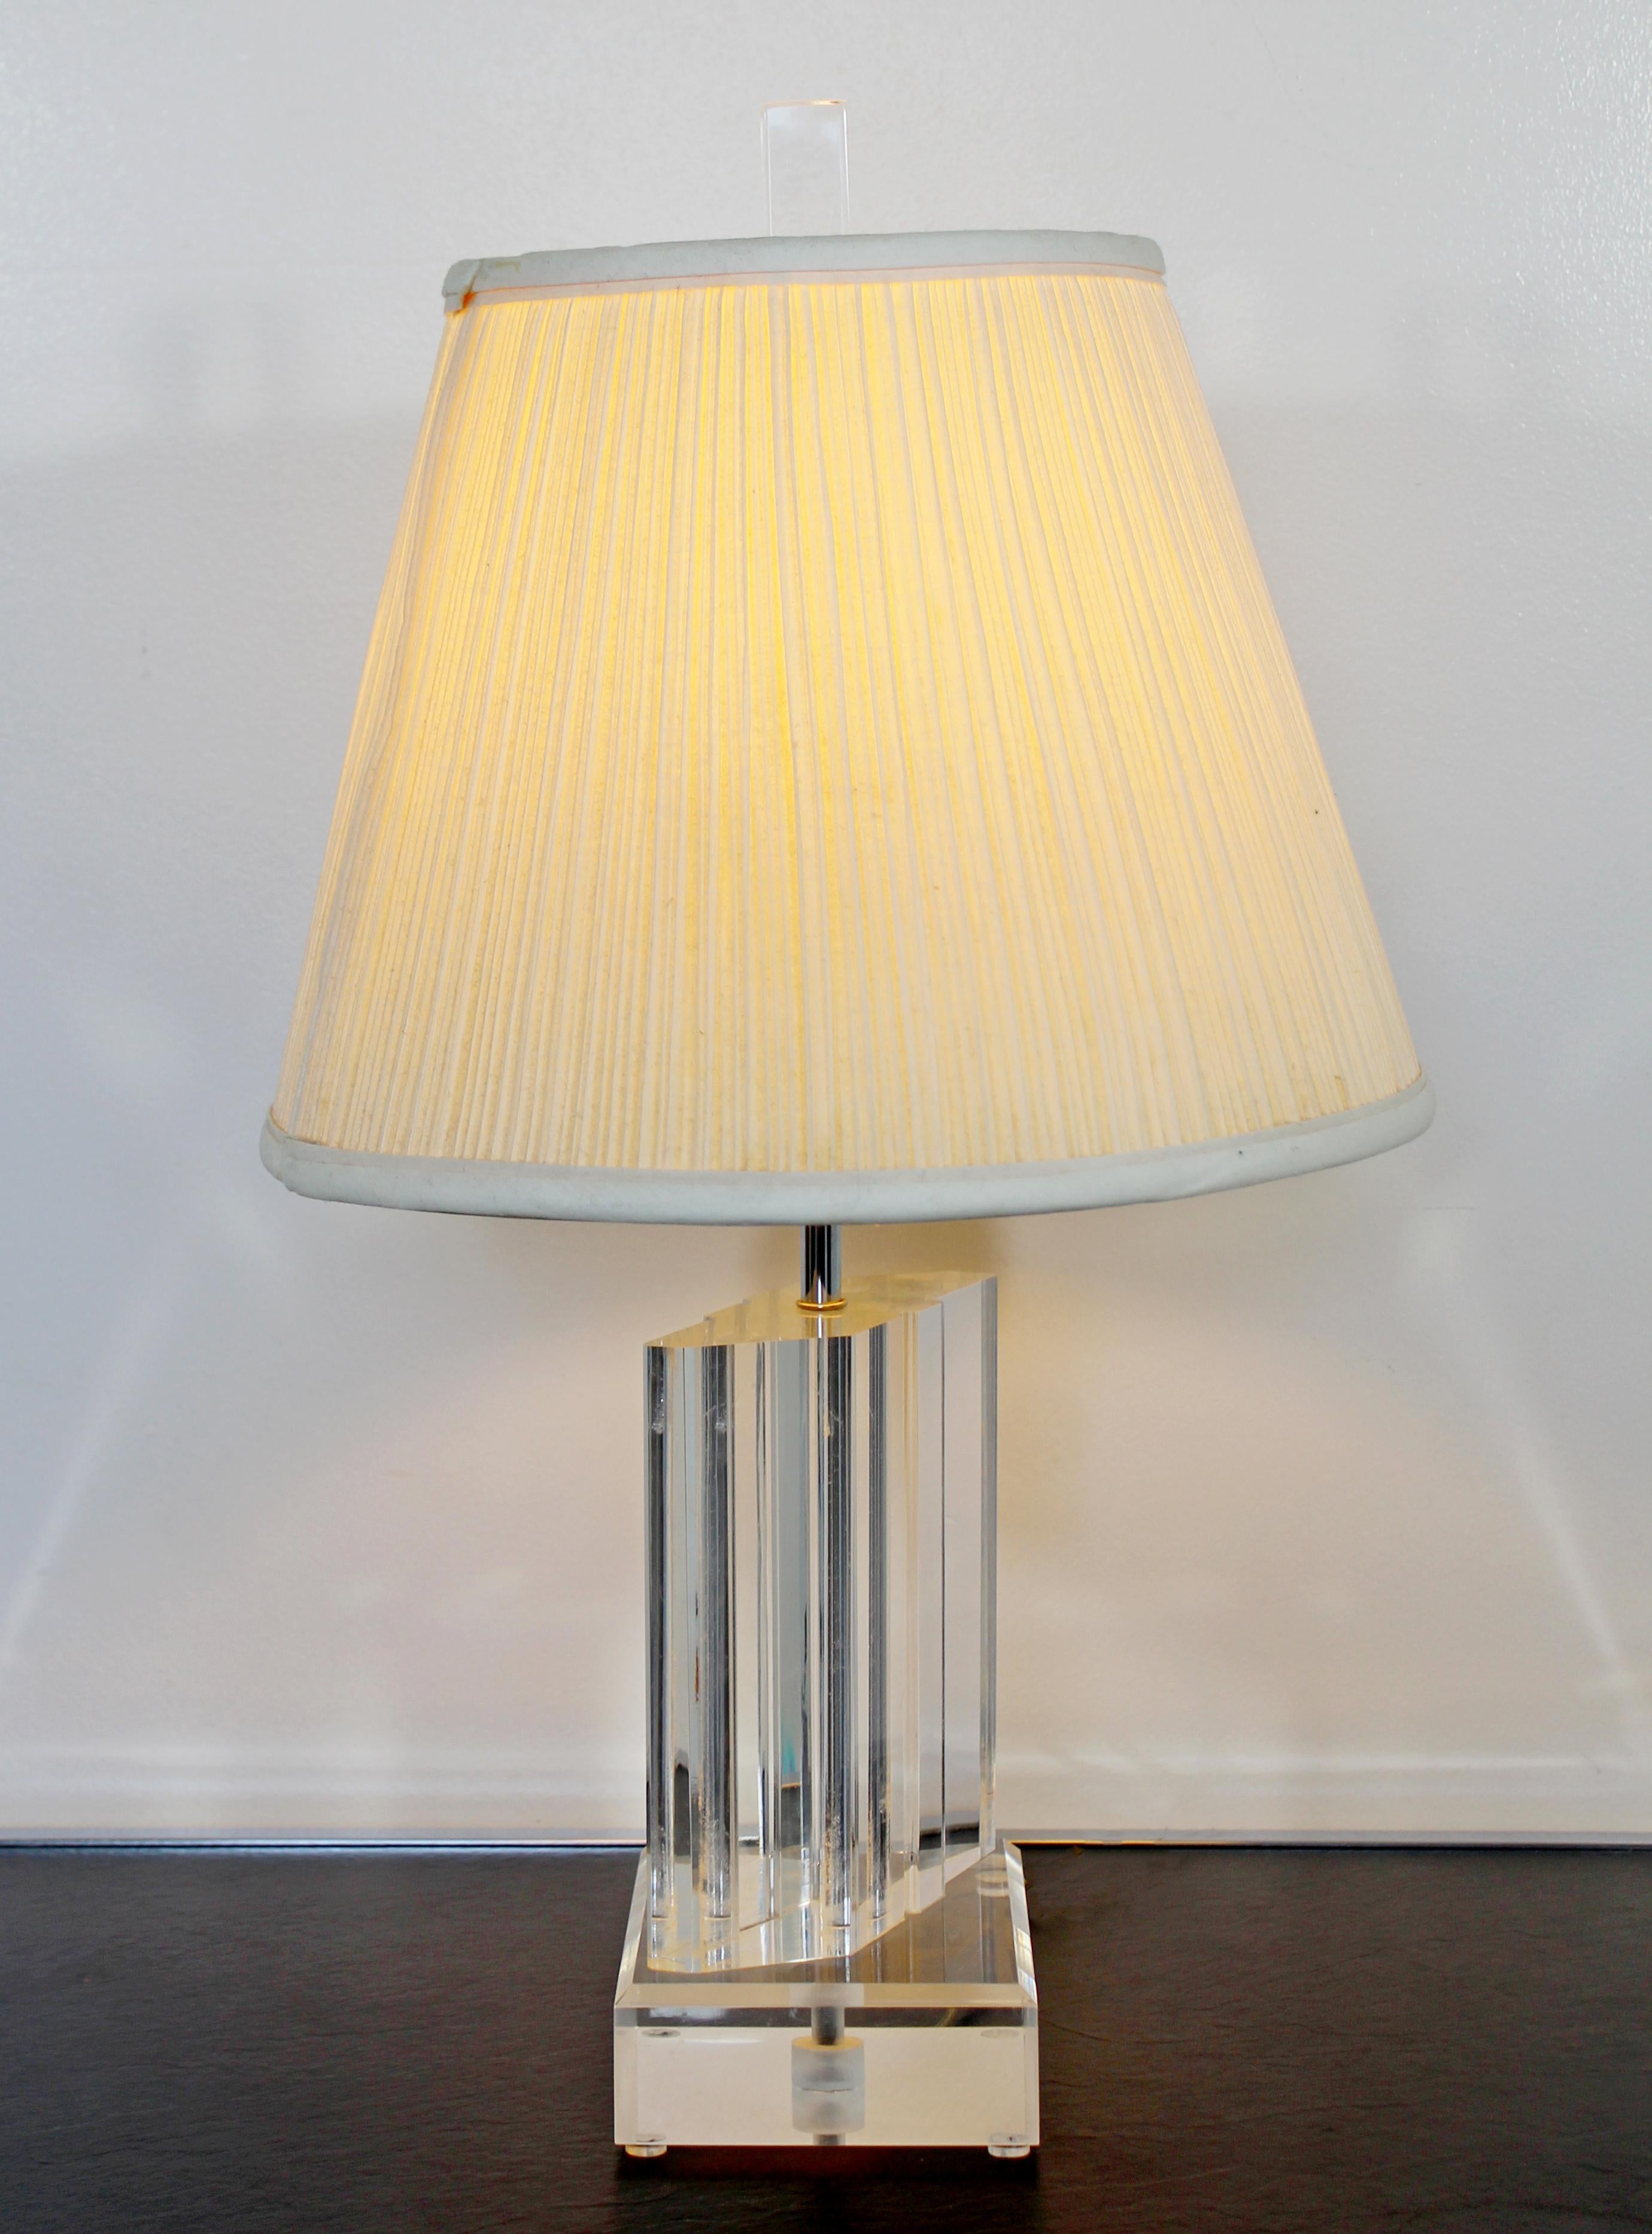 Late 20th Century Mid-Century Modern Angled Lucite Table Lamp Springer Era 1970s Original Finial